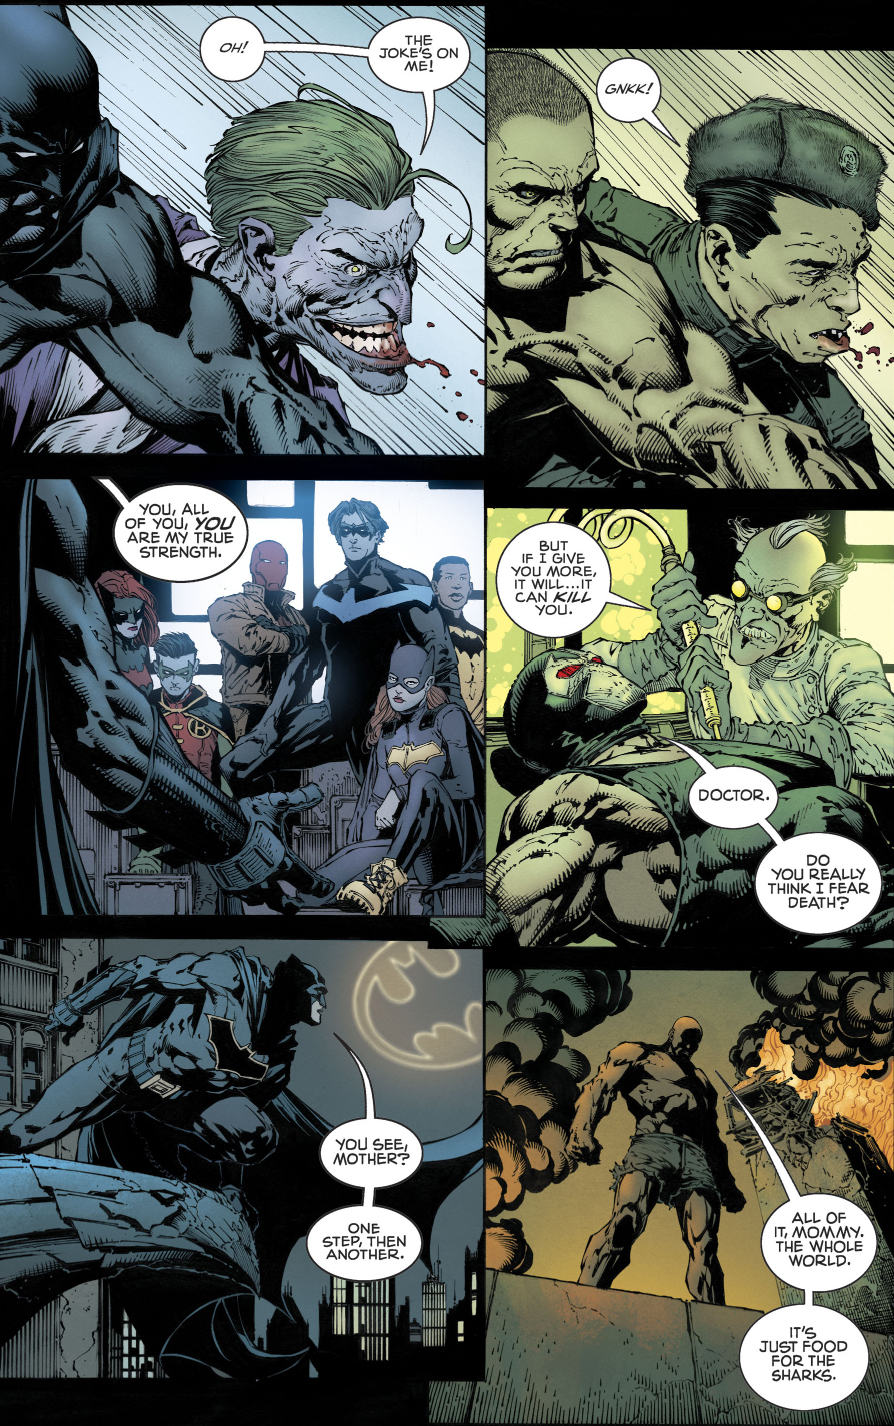 how-alike-batman-and-bane-are-rebirth